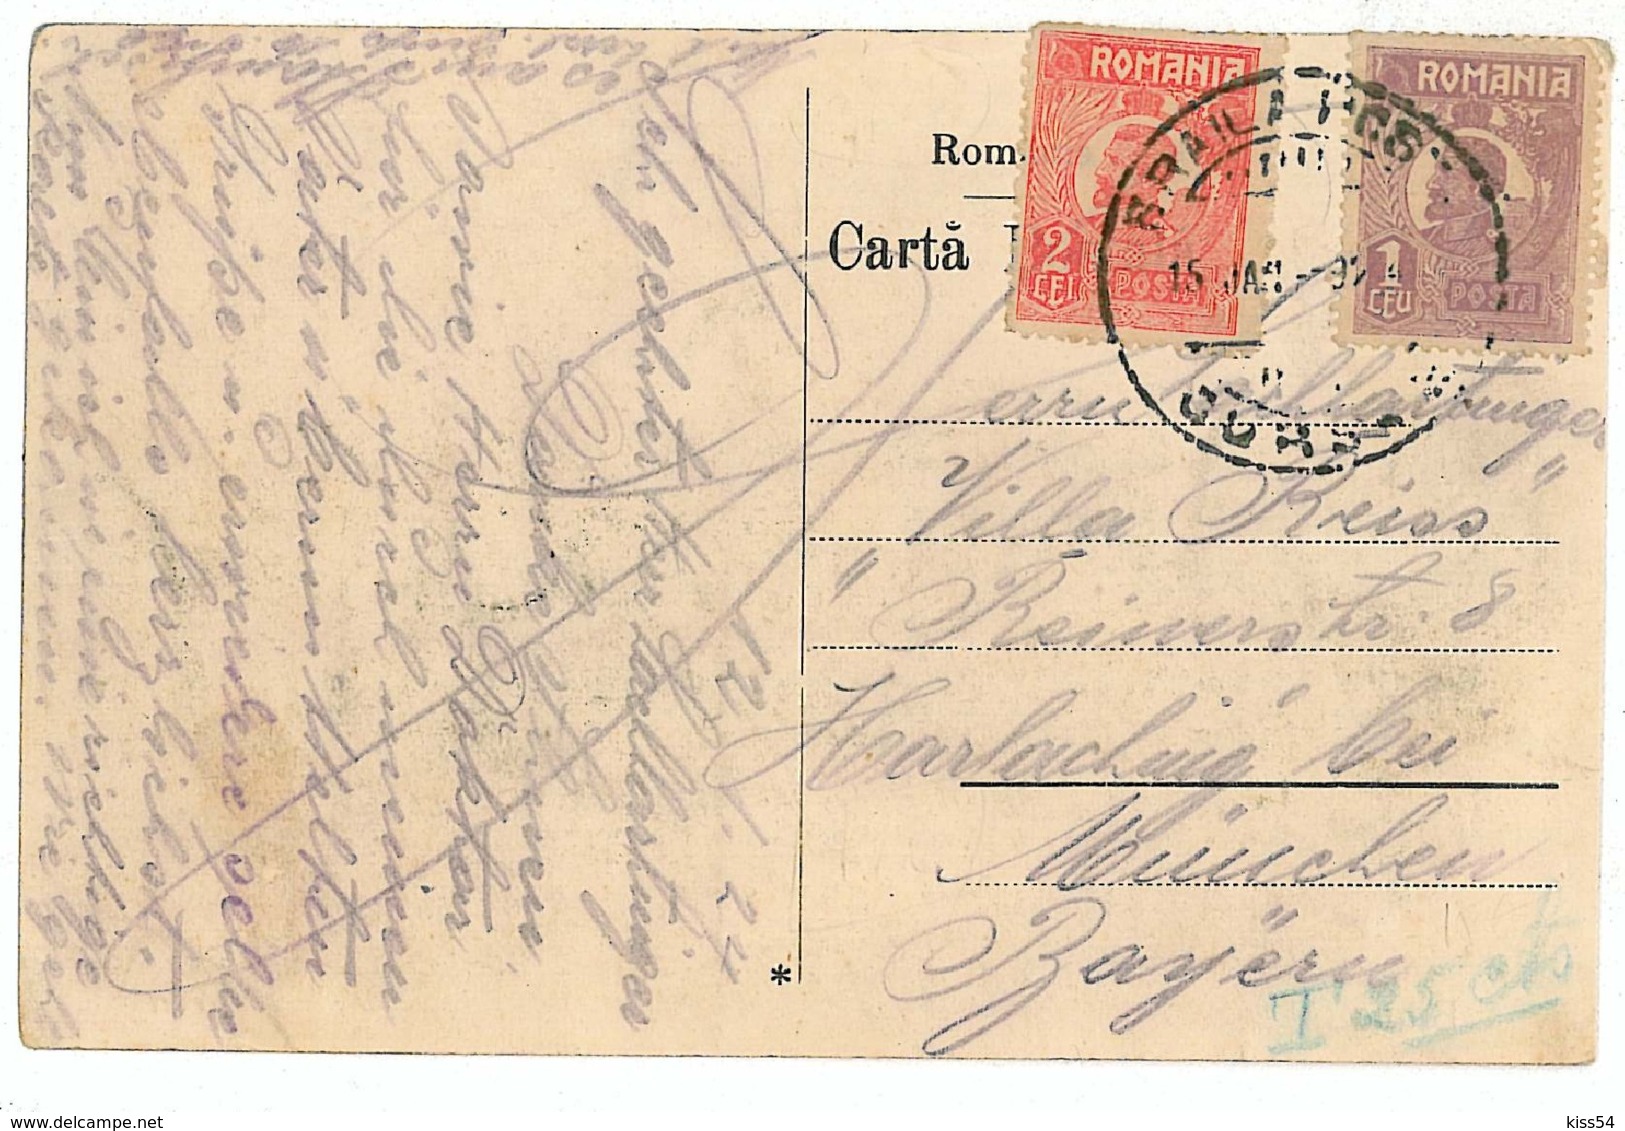 RO 22 - 3720 BRAILA, Romania, Harbor, Ship - Old Postcard - Used - 1924 - Romania